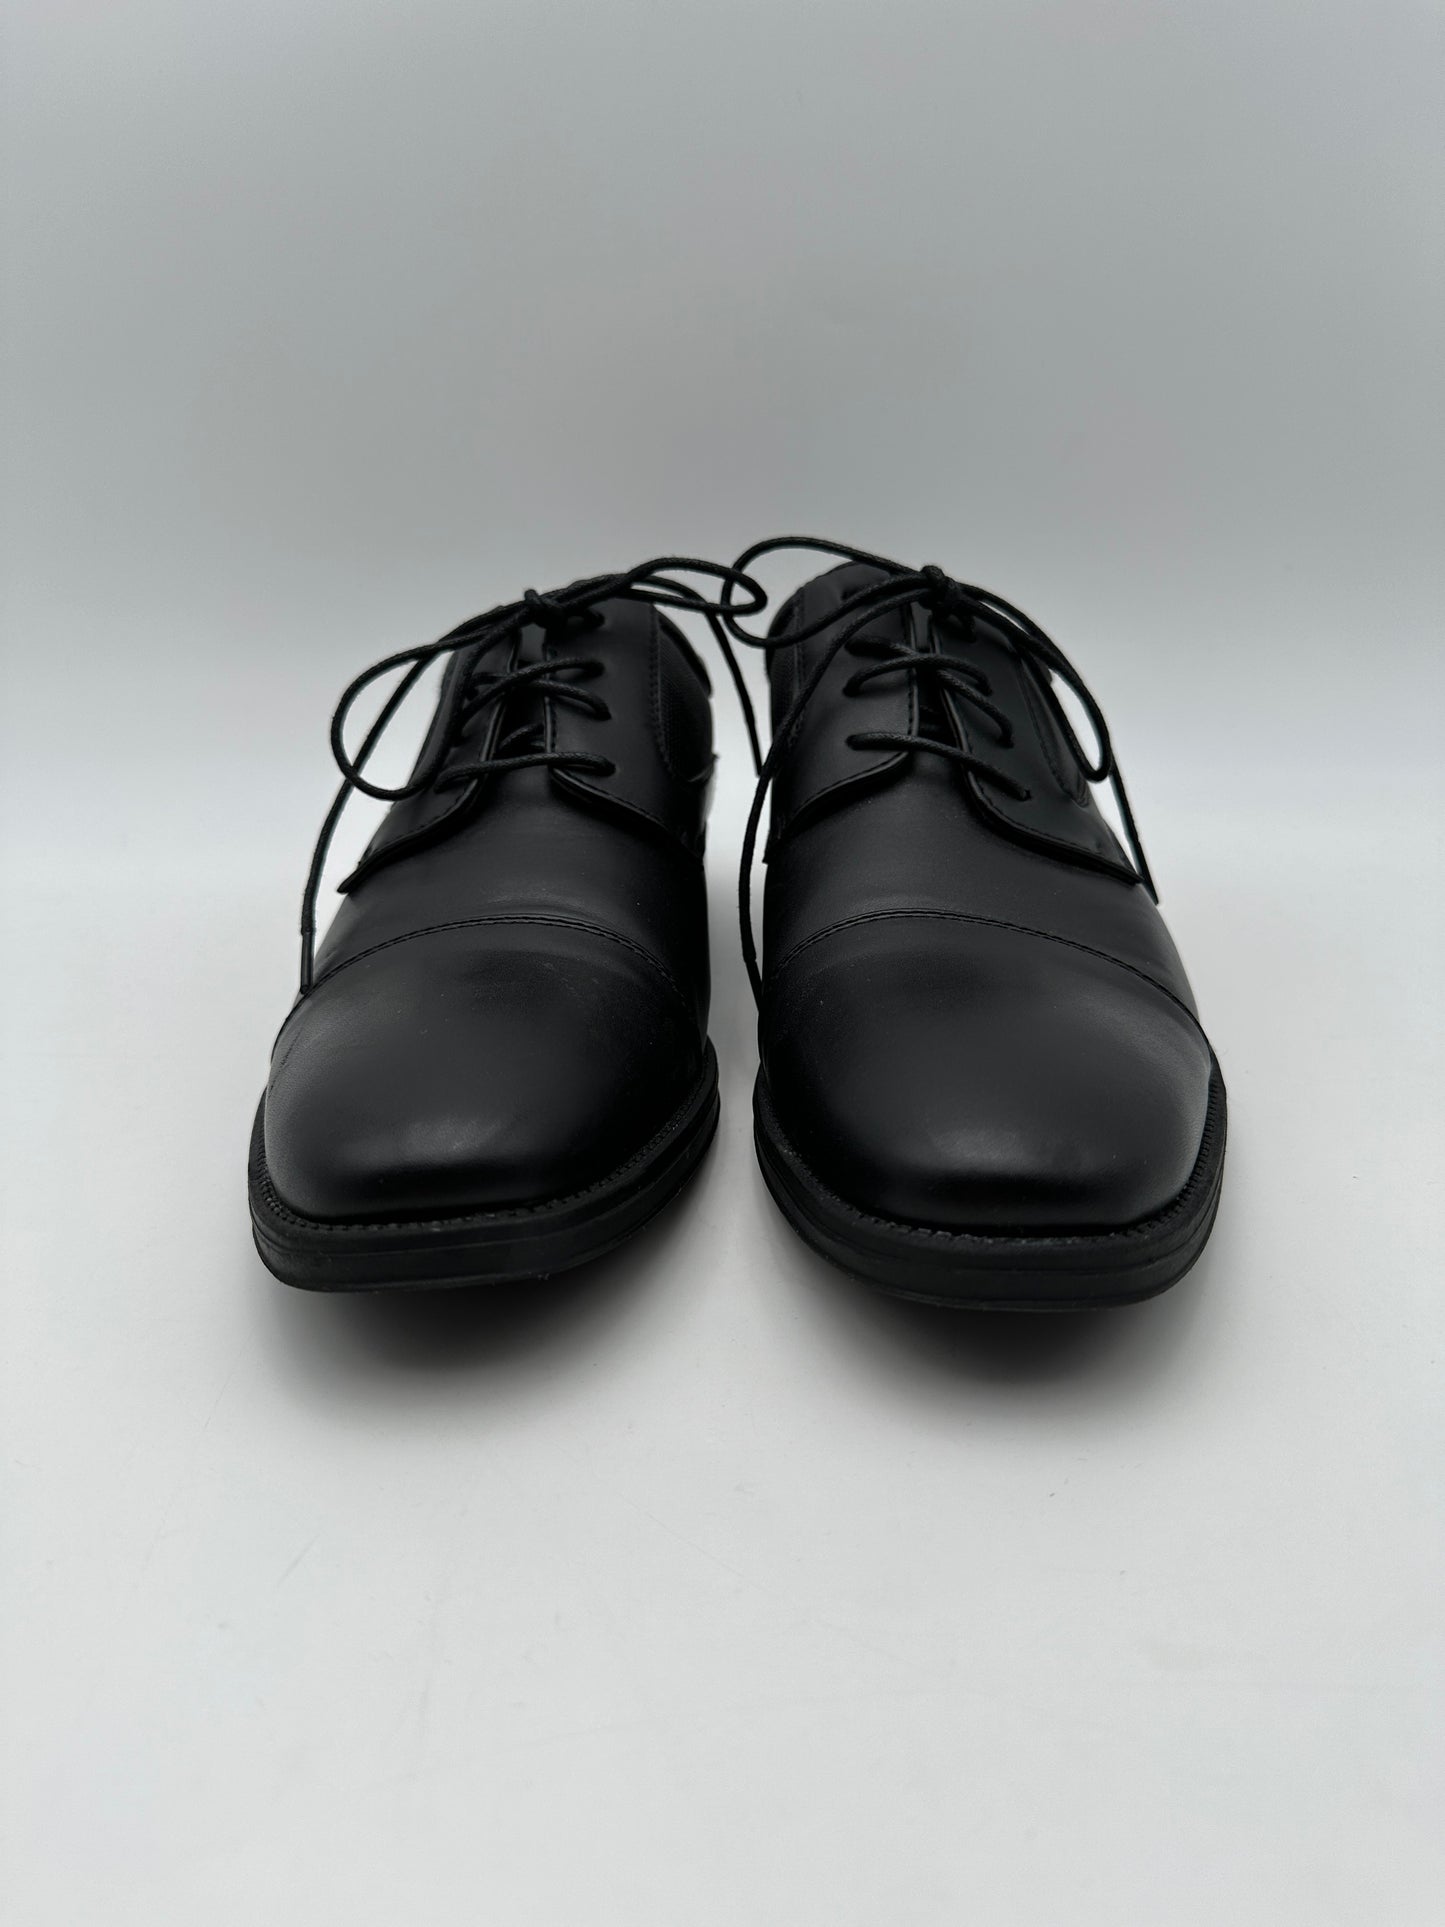 Mr. Hansen Men's Size 42 (US 8.5) Vegan Leather Black Dress Shoes